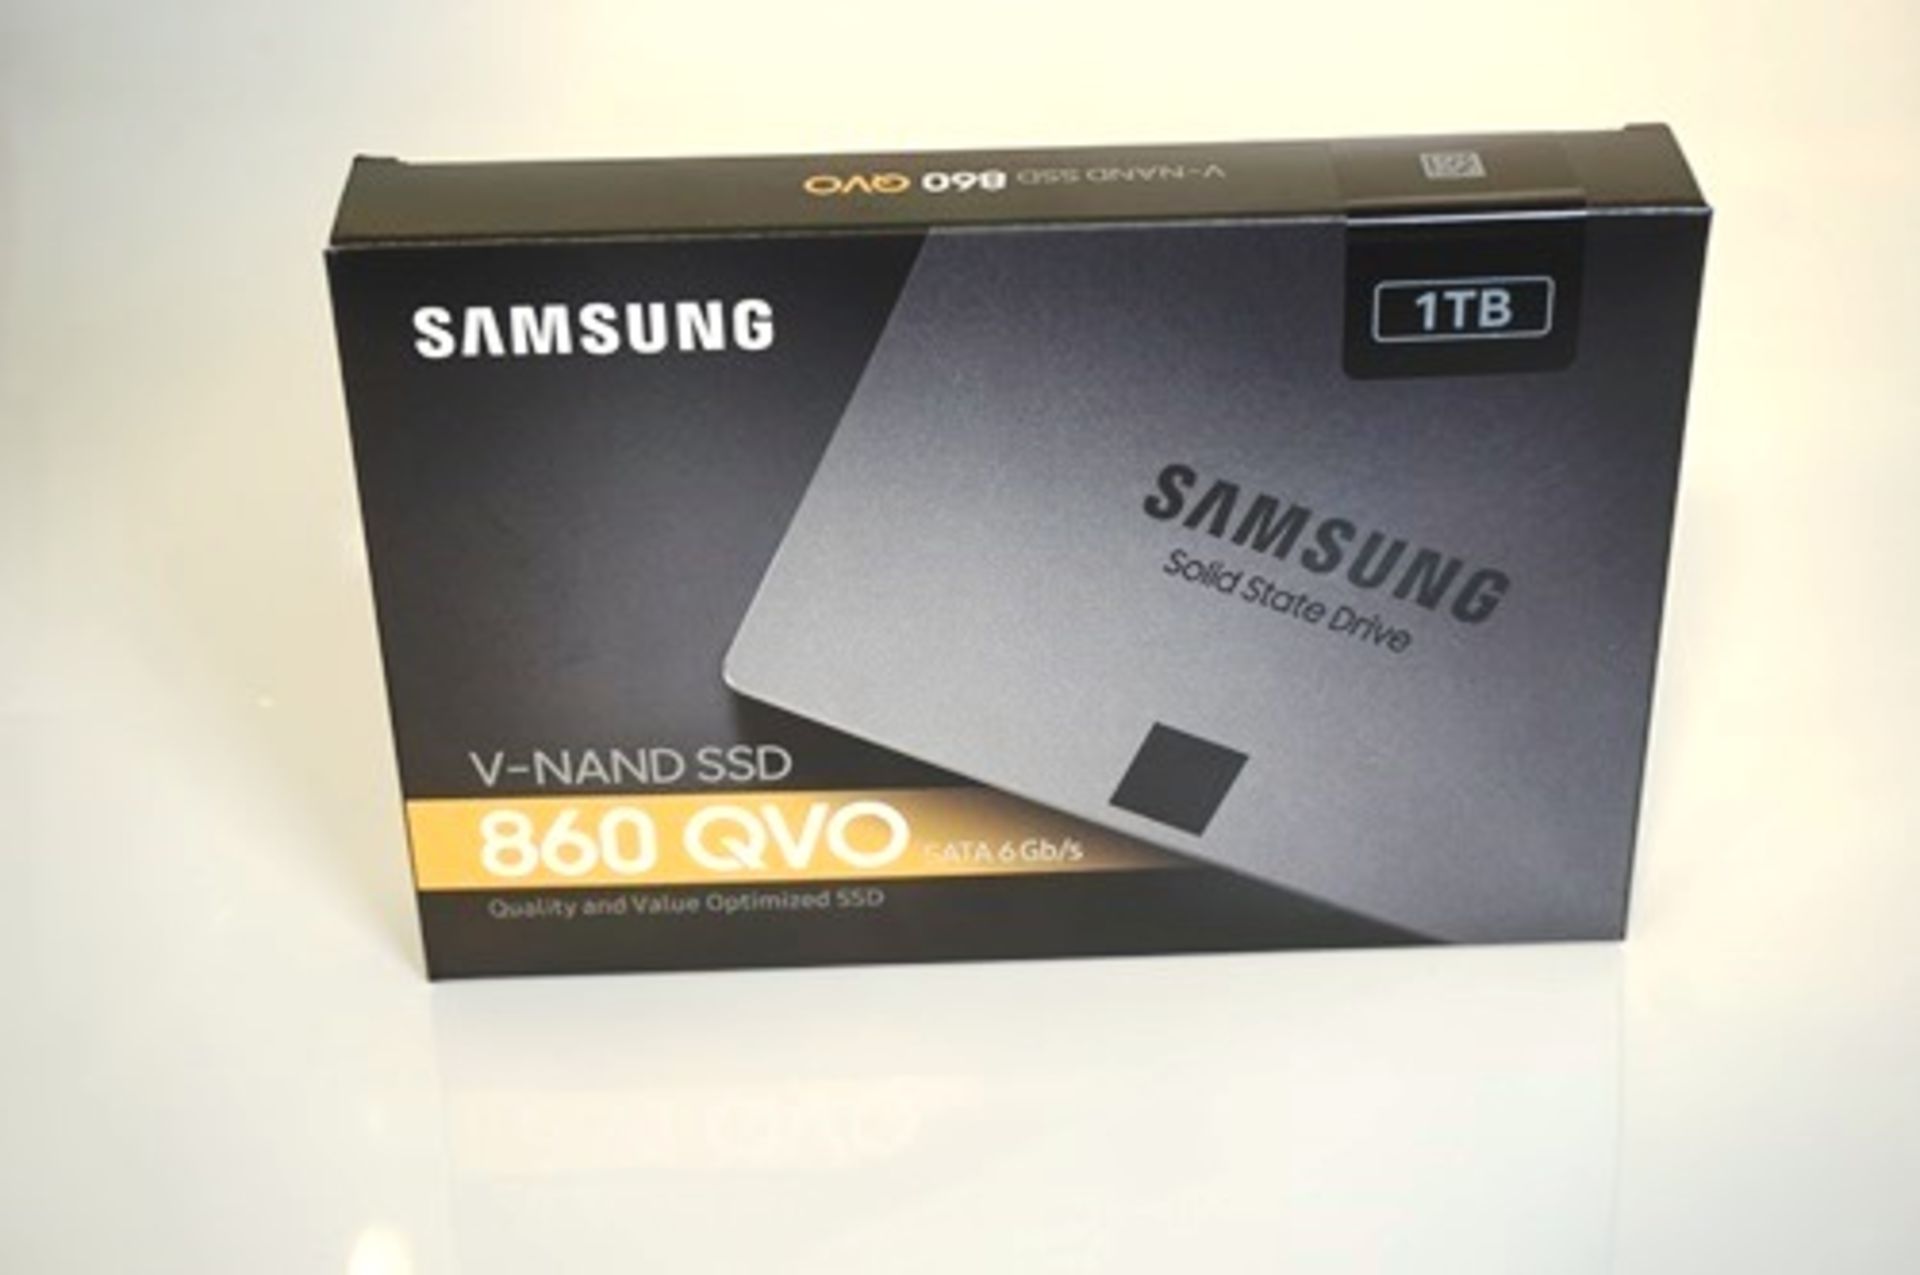 1 x Samsung V-Nand SSD 1TB Sata hard drive, model MZ-76Q1TO - Sealed new in box (FC2)